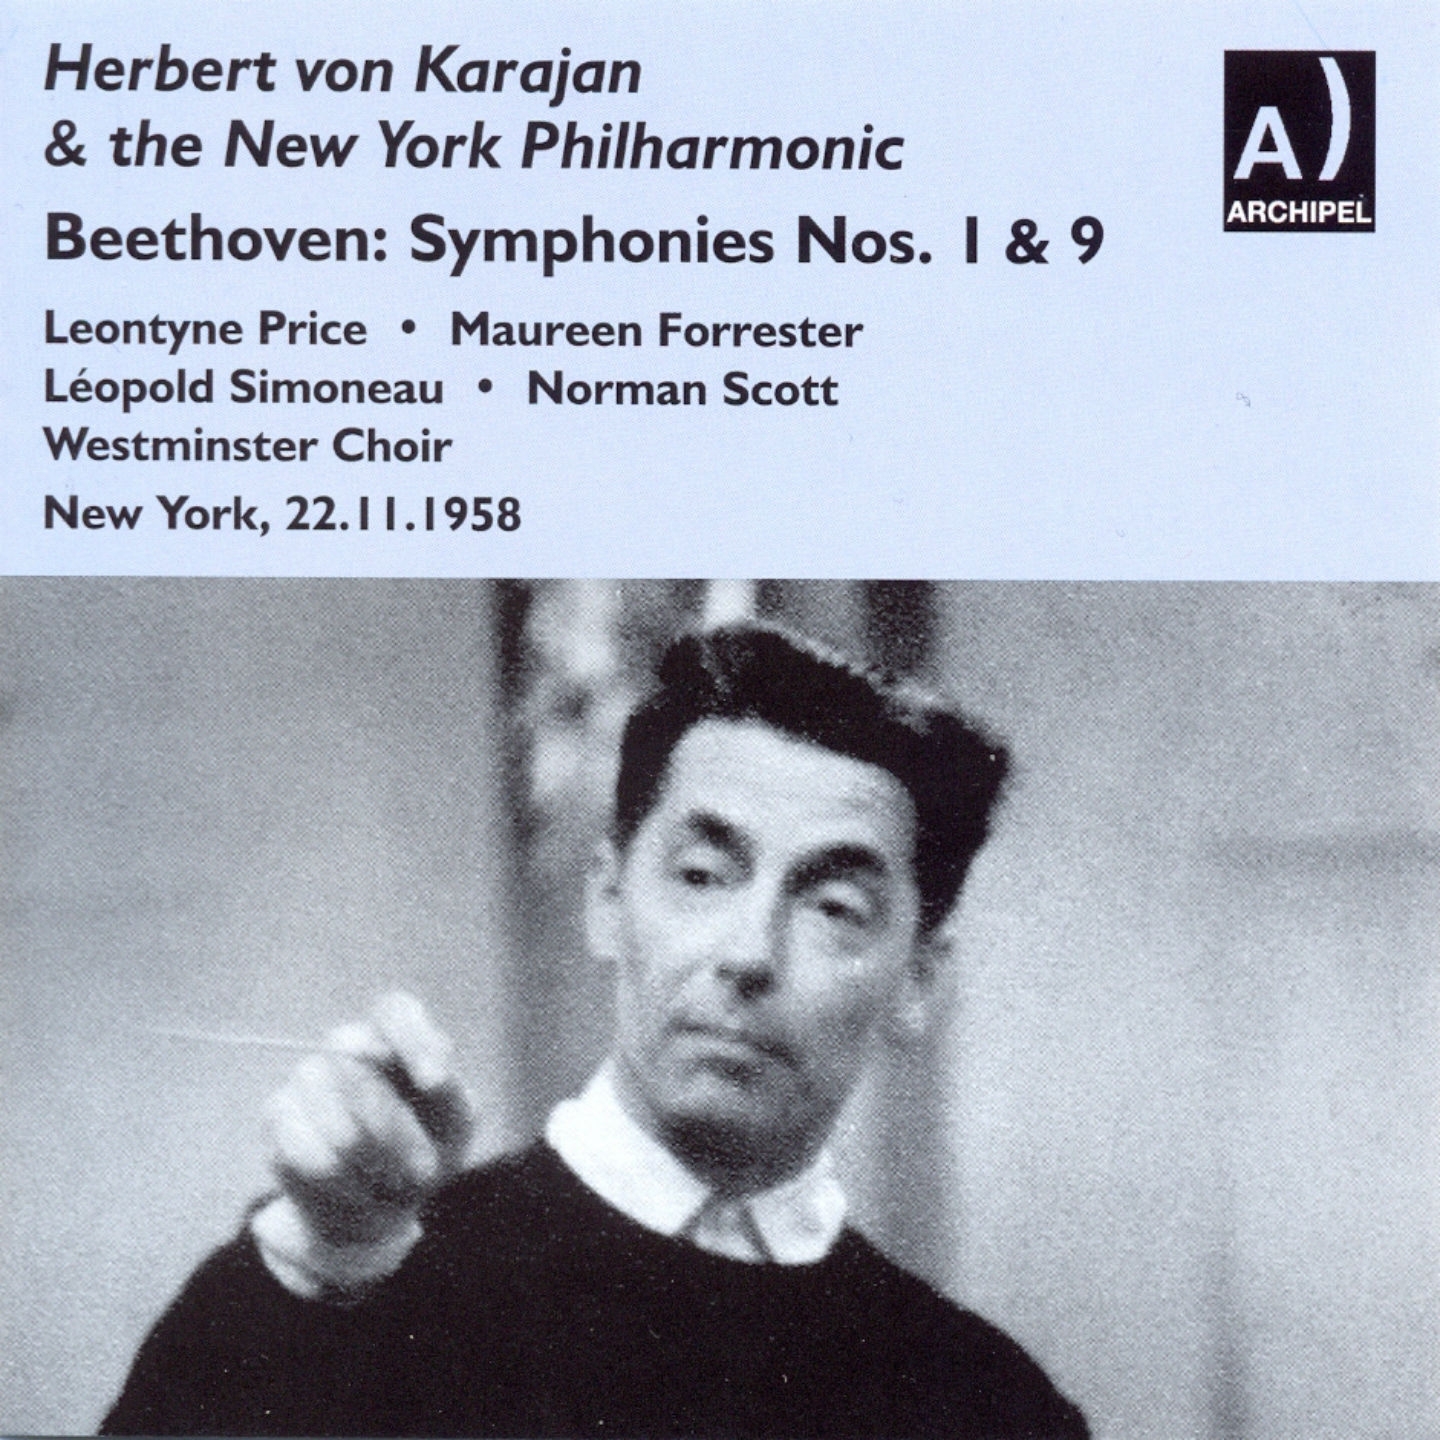 Beethoven: Symphonies Nos. 1 & 9 By Herbert von Karajan and the New York Philharmonic